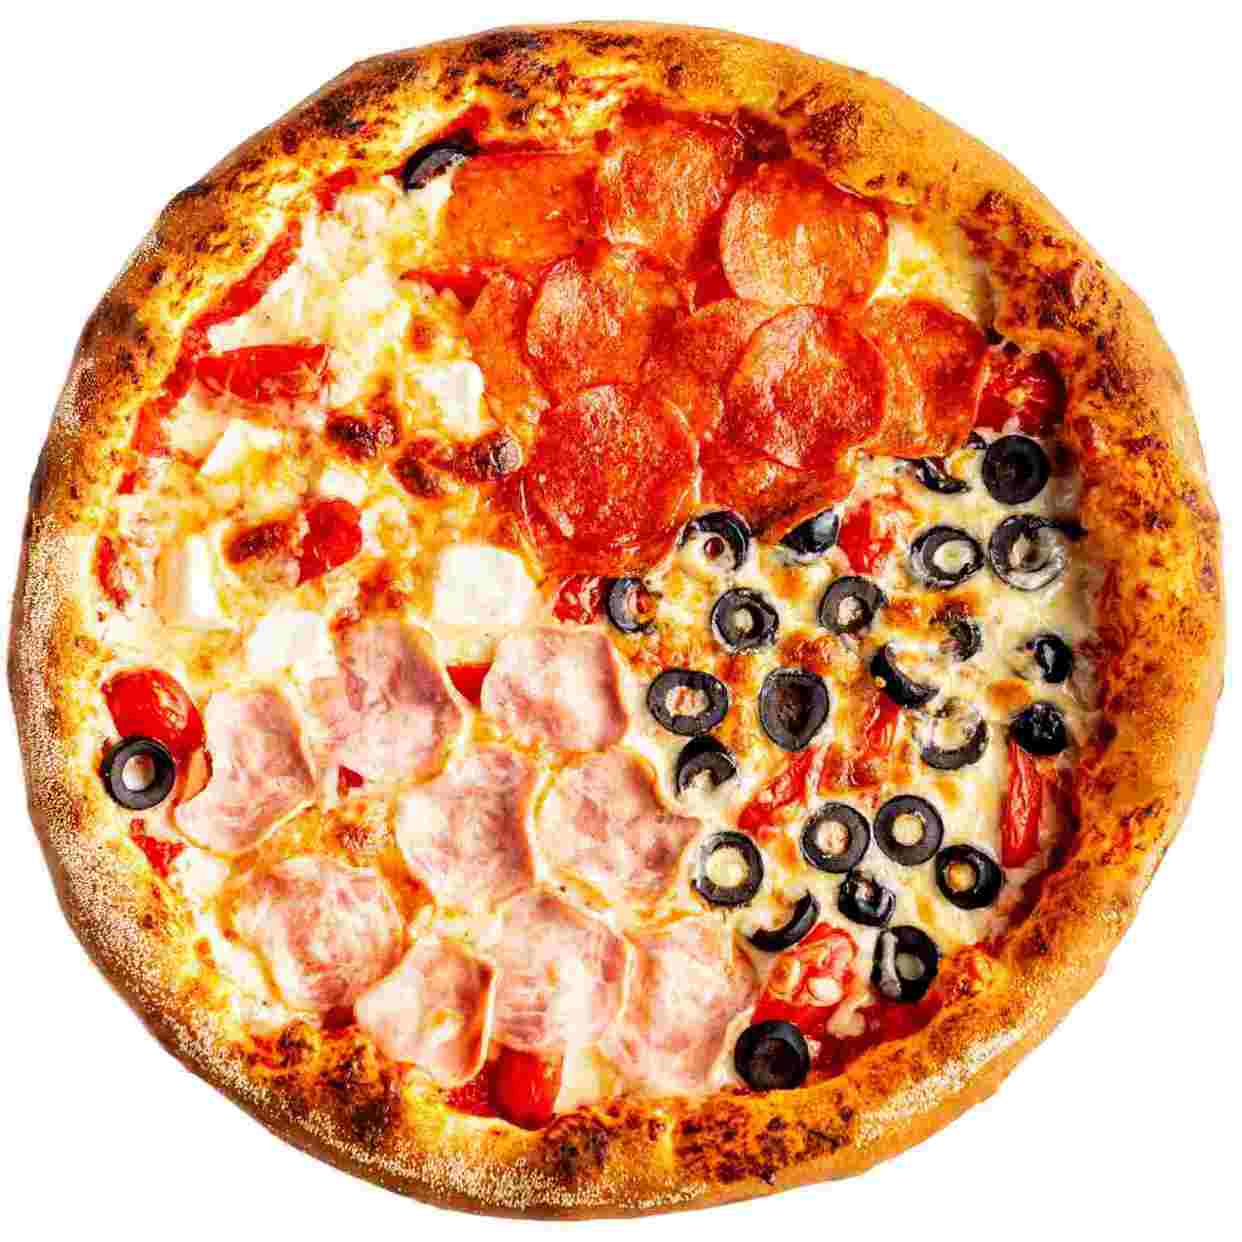 пицца четыре сезона рецепт с фото пошагово фото 87